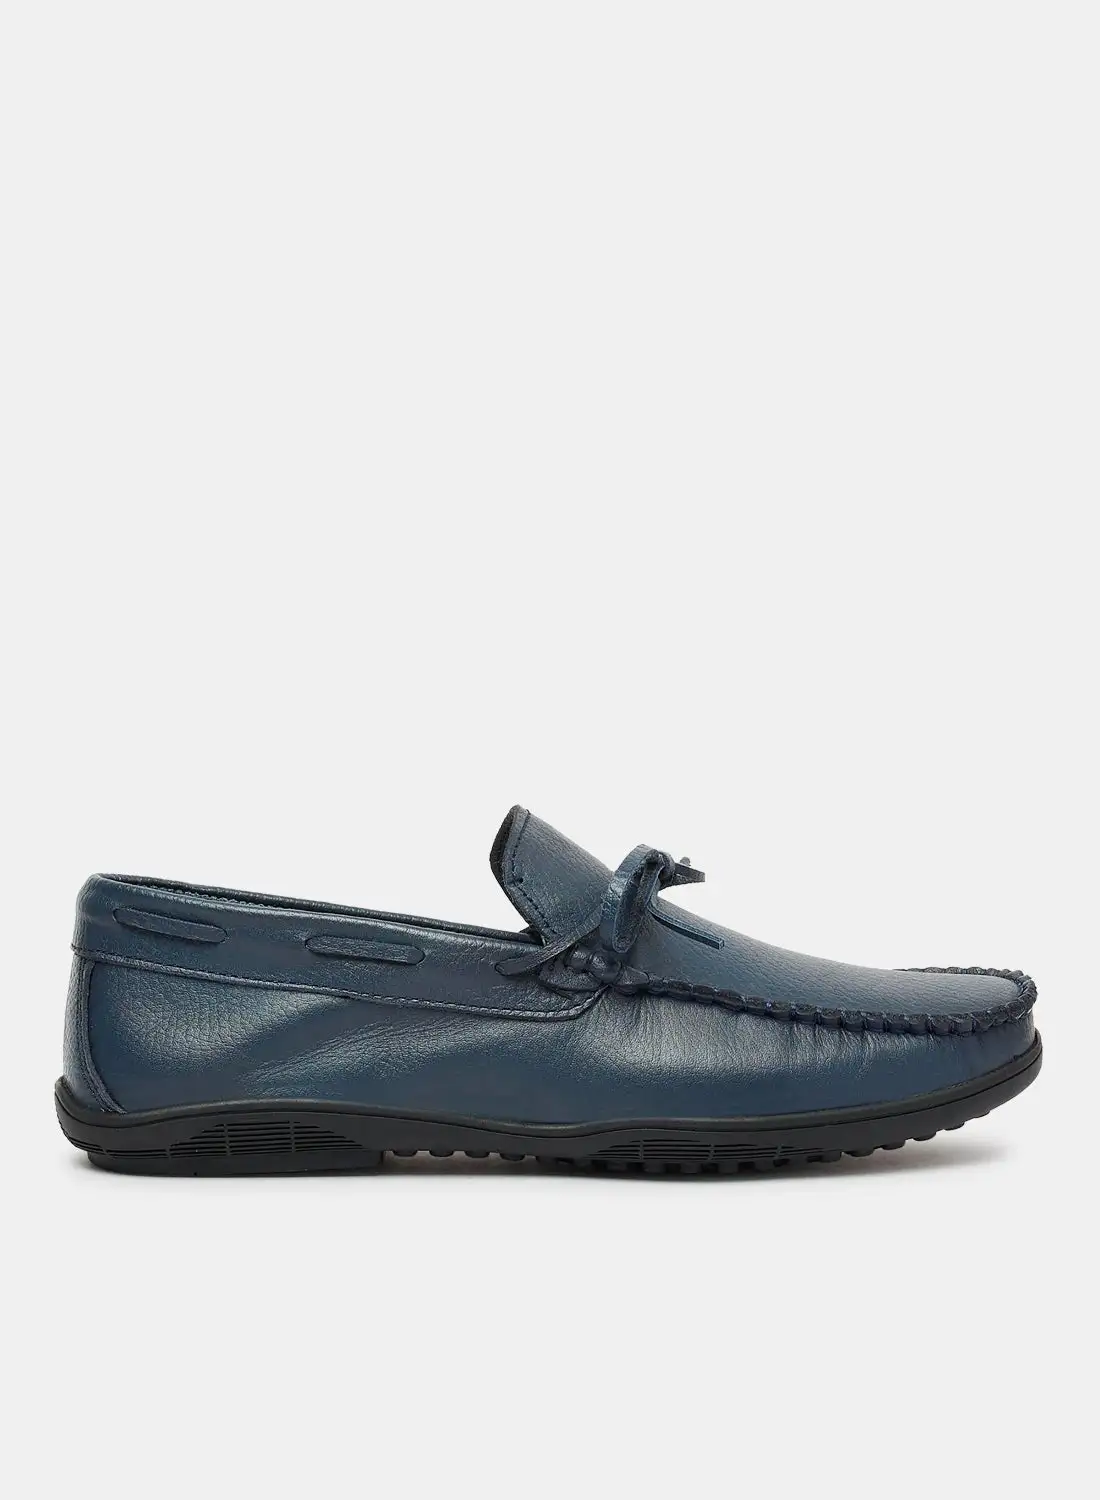 Roadwalker ARL9-Genuine Leather Stitch Detail Slip On Shoes for Men